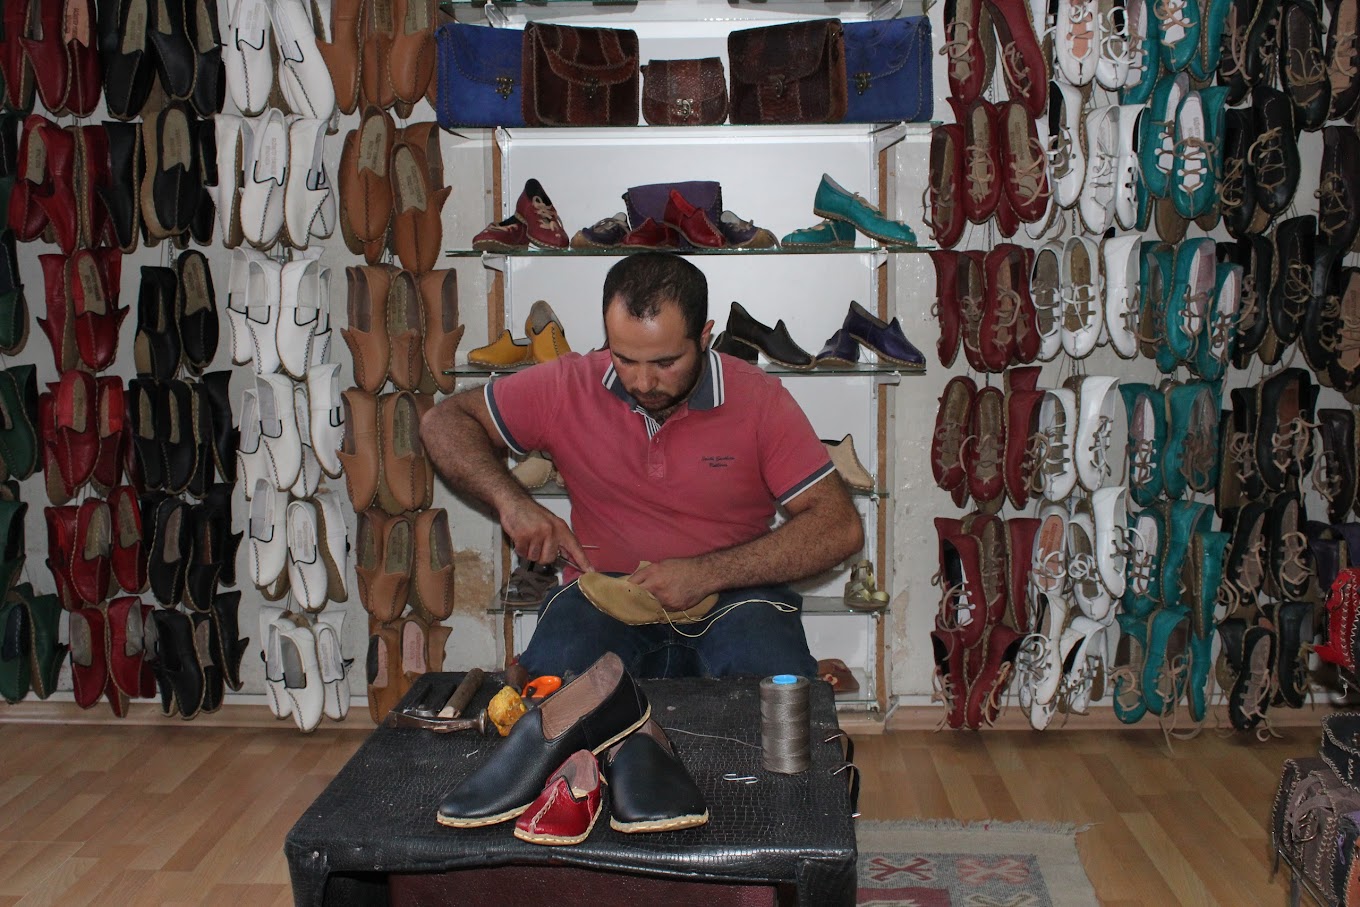 Turkish yemeni shoes as souvenirs